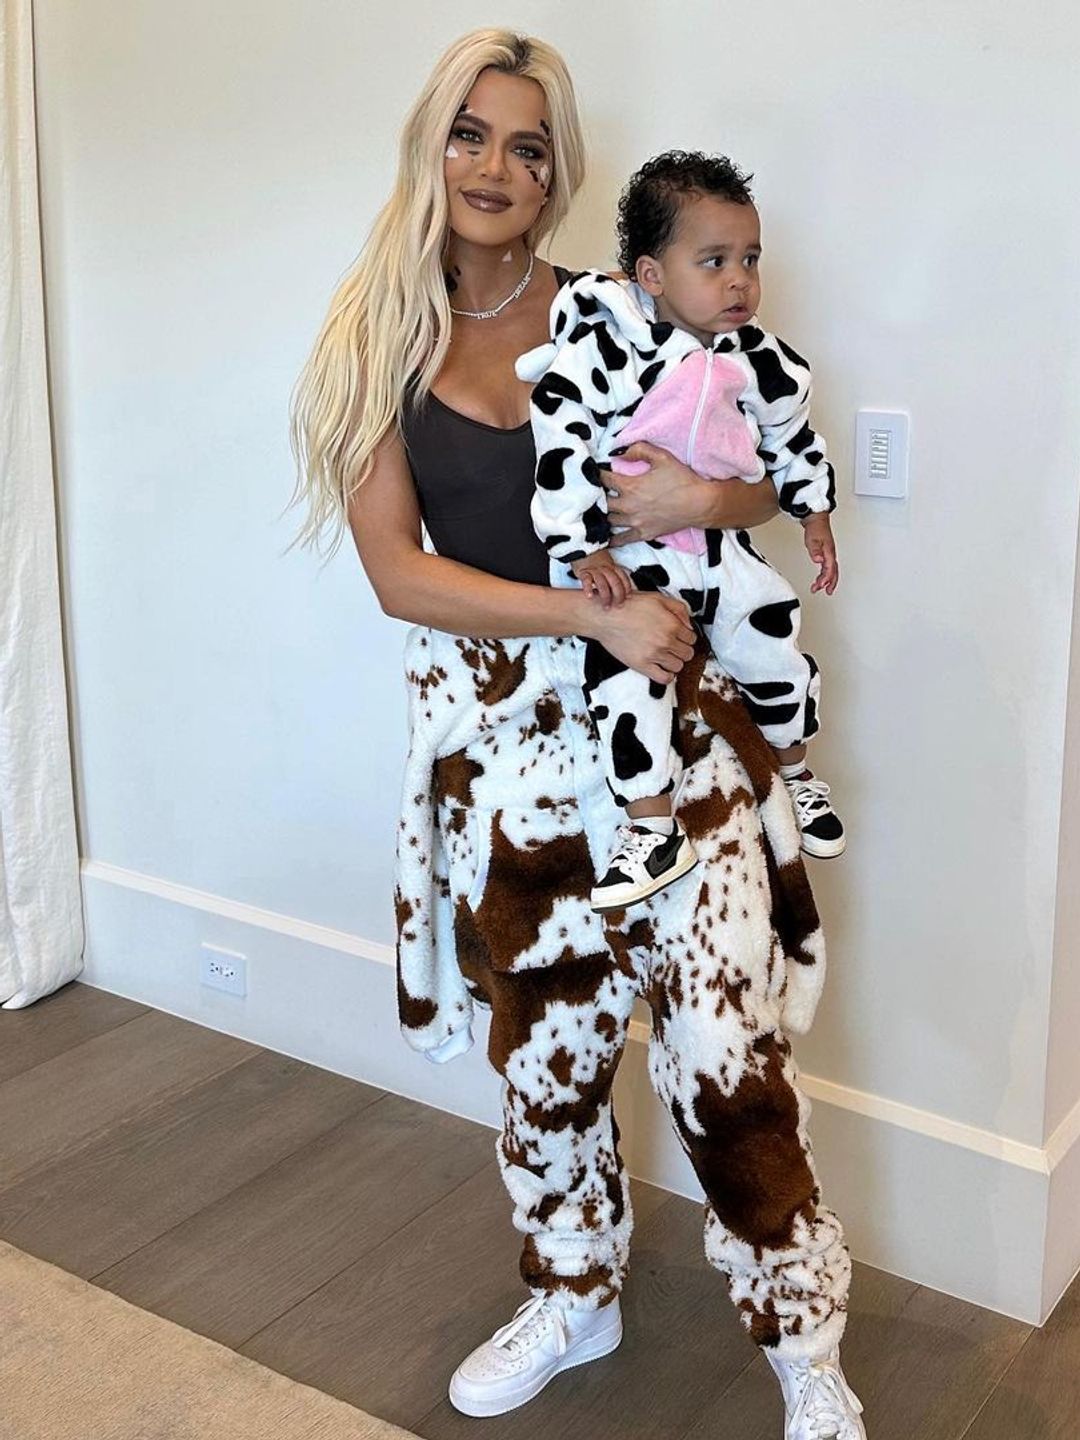 khloe kardashian and son tatum dressed as cows for halloween